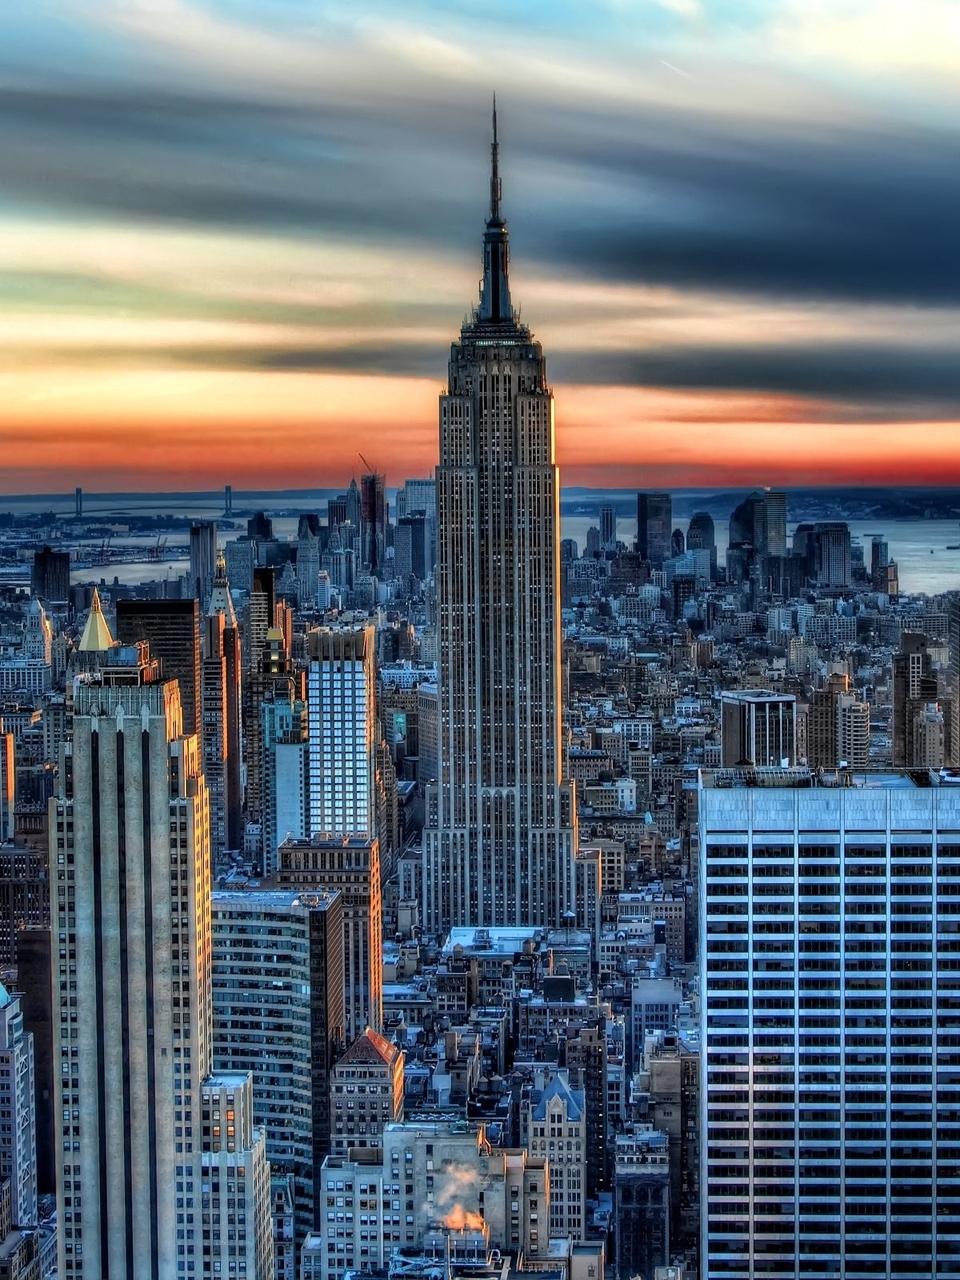 Картинка: New york city, Нью-Йорк, здания, небо, небоскрёбы, Эмпайр-стейт-билдинг, панорама, город